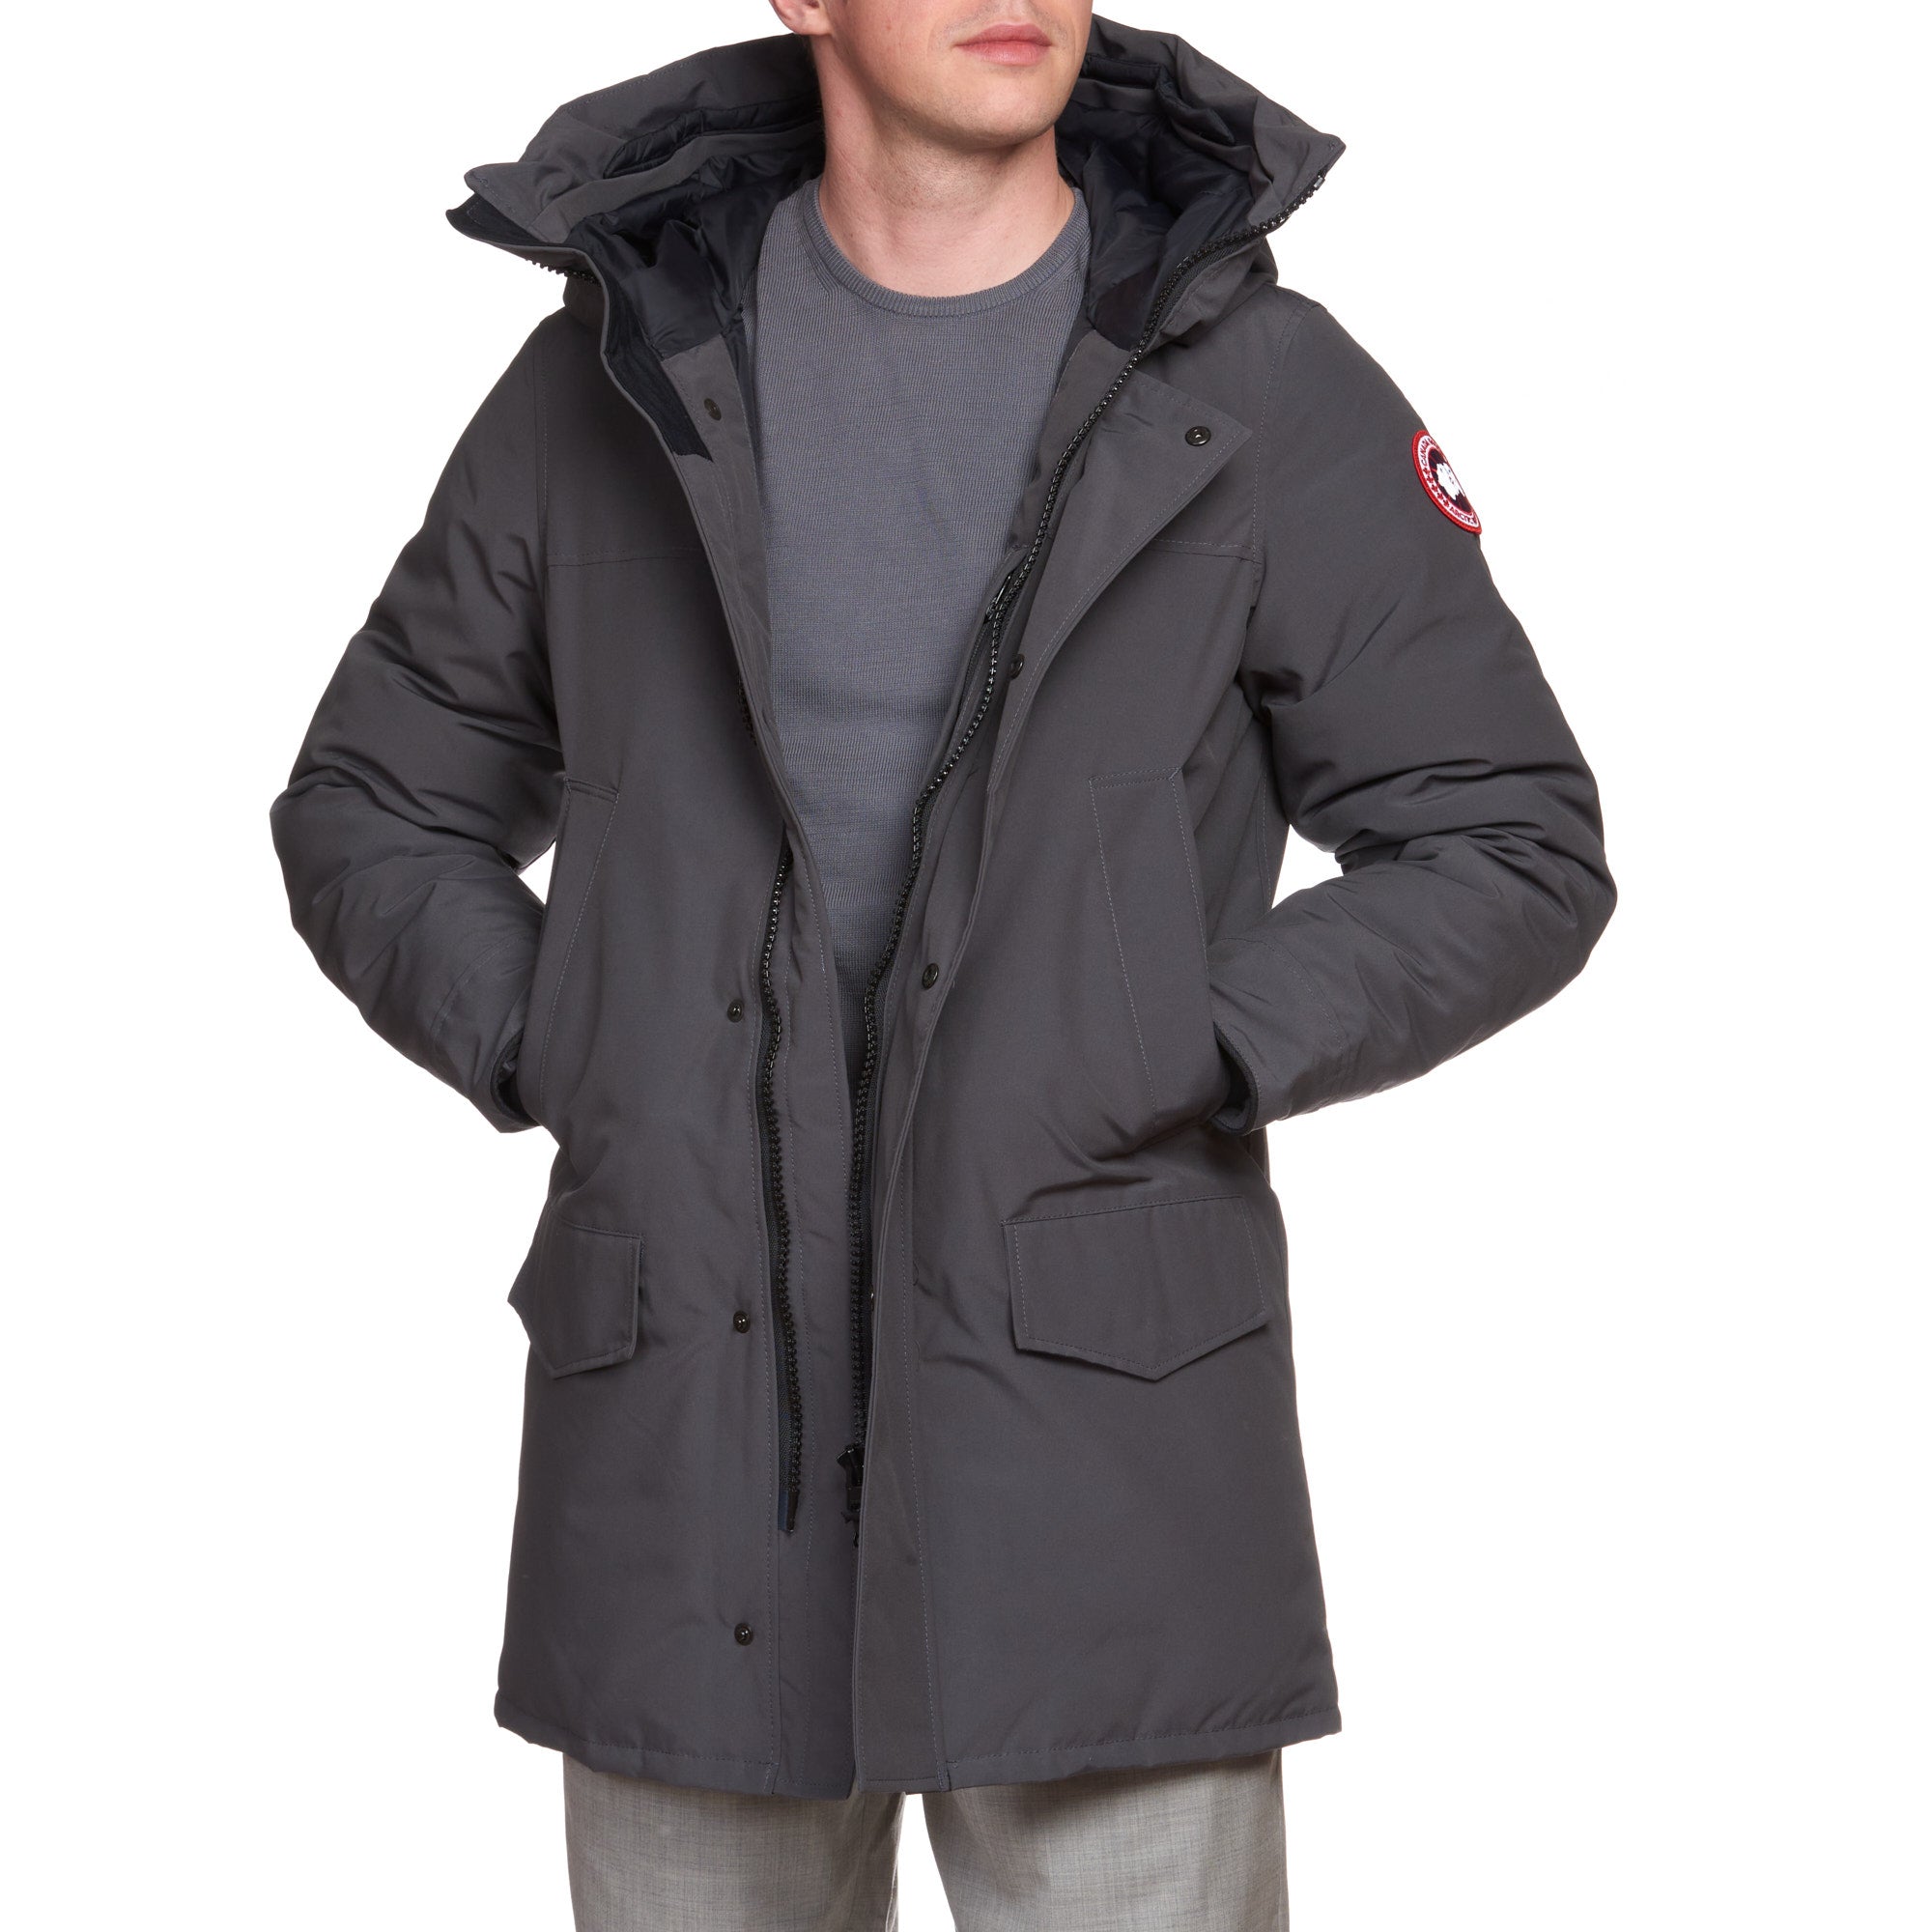 CANADA GOOSE Langford Parka 2052M 66 Graphite Gray Down Jacket Coat S